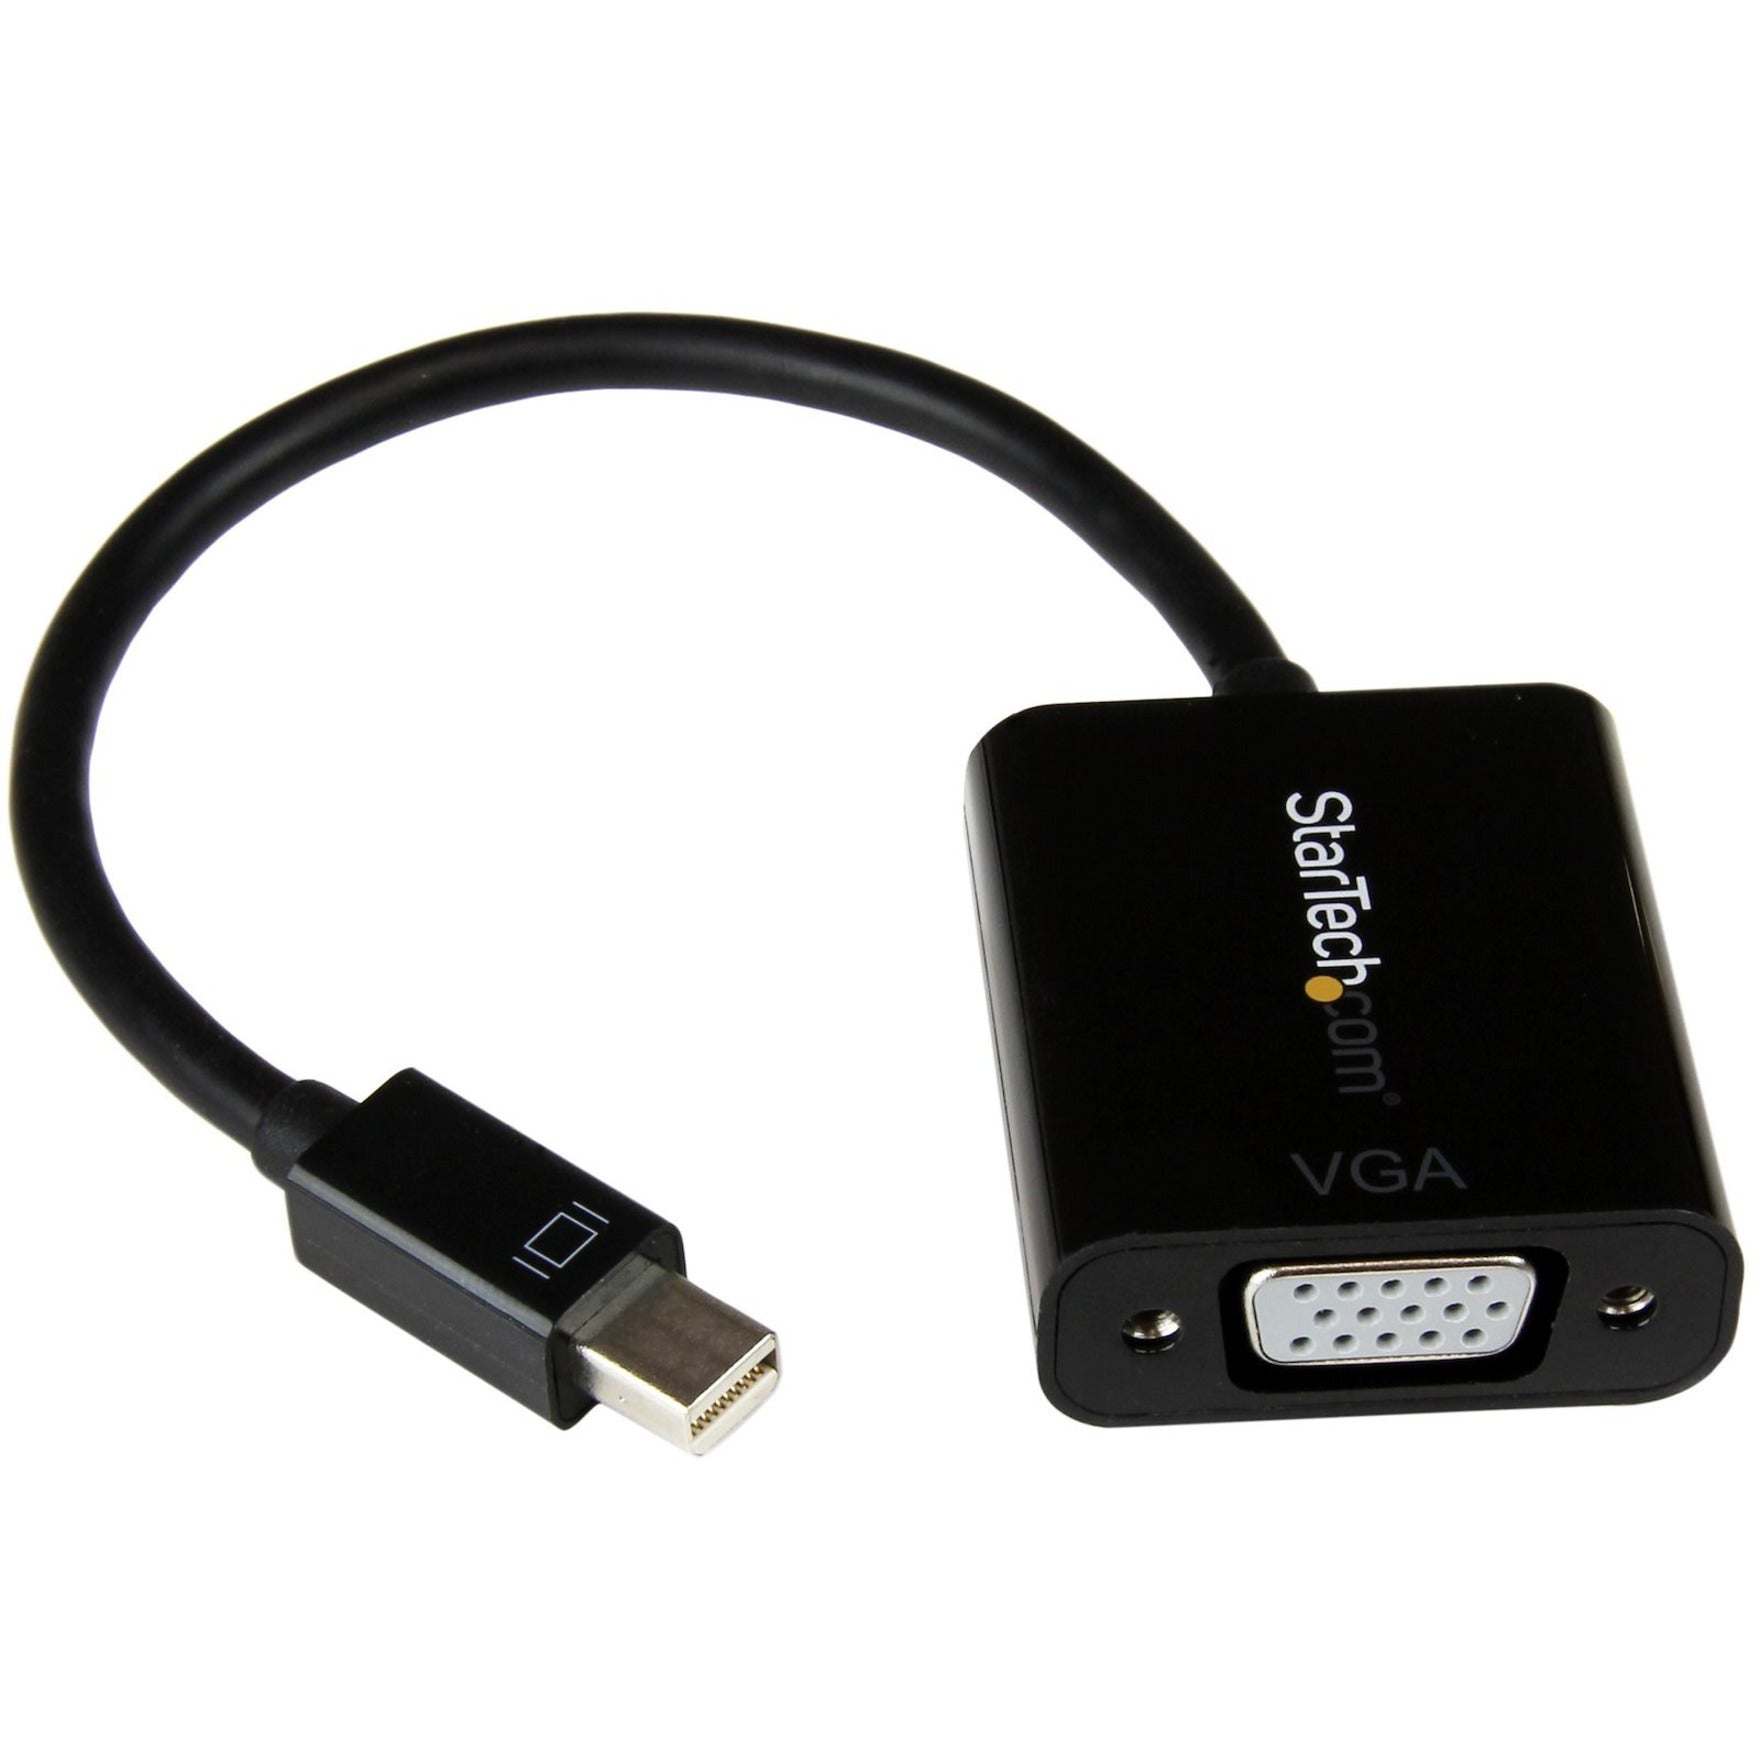 StarTech.com MDP2VGA2 Mini DisplayPort 1.2 to VGA Adapter Converter - Connect Your Mini DP Device to a VGA Display